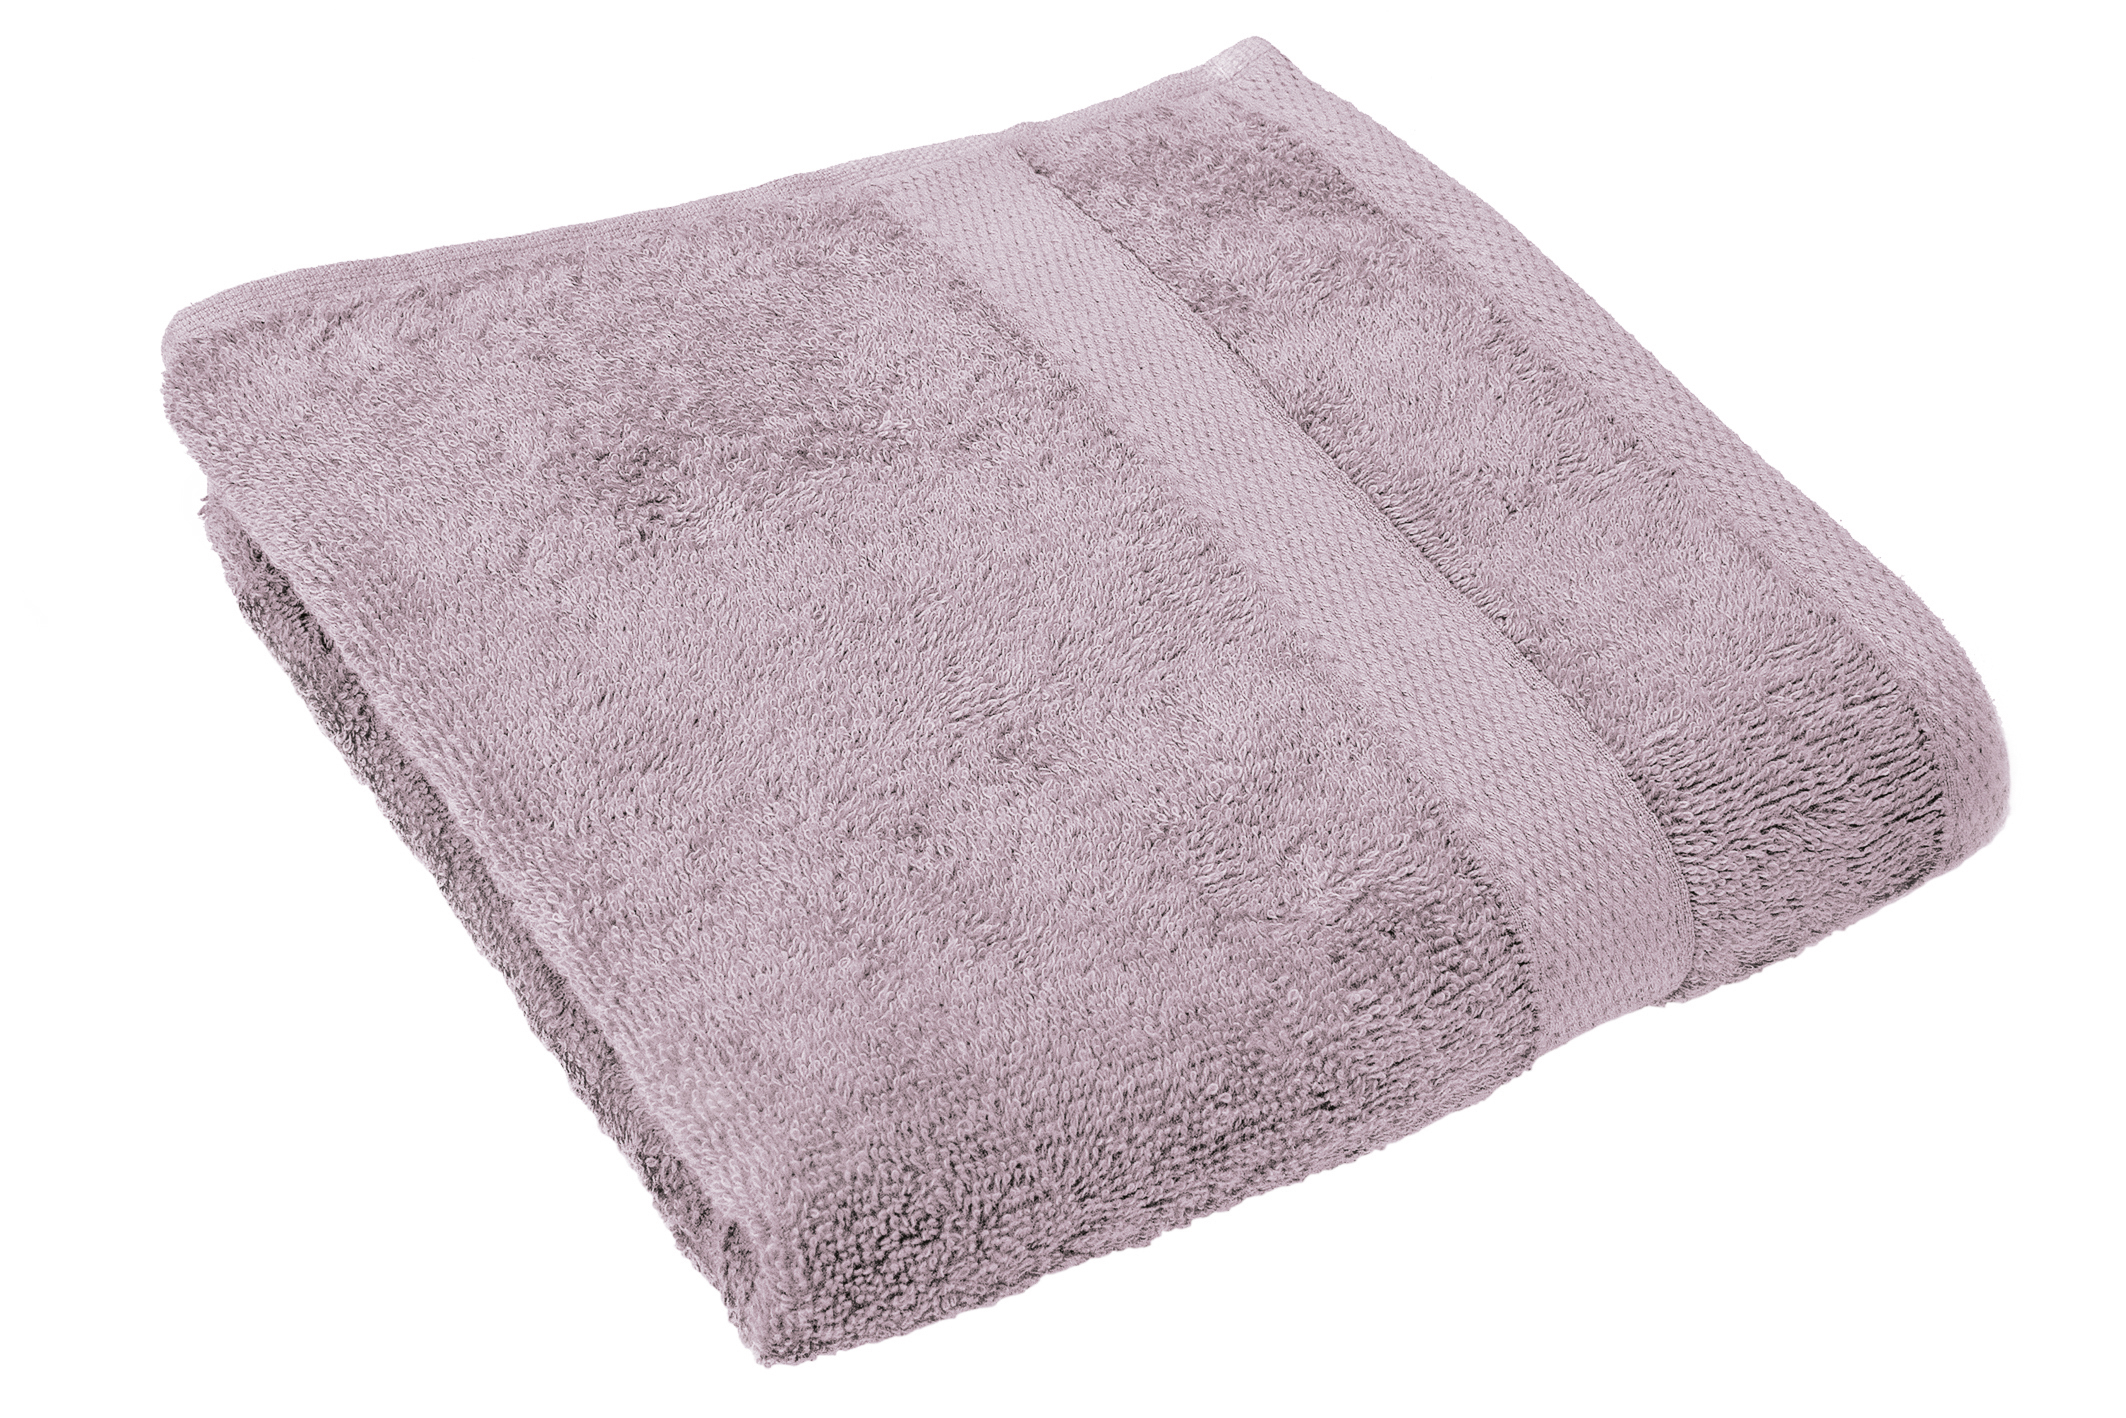 Shower towel 100x150cm, lilac